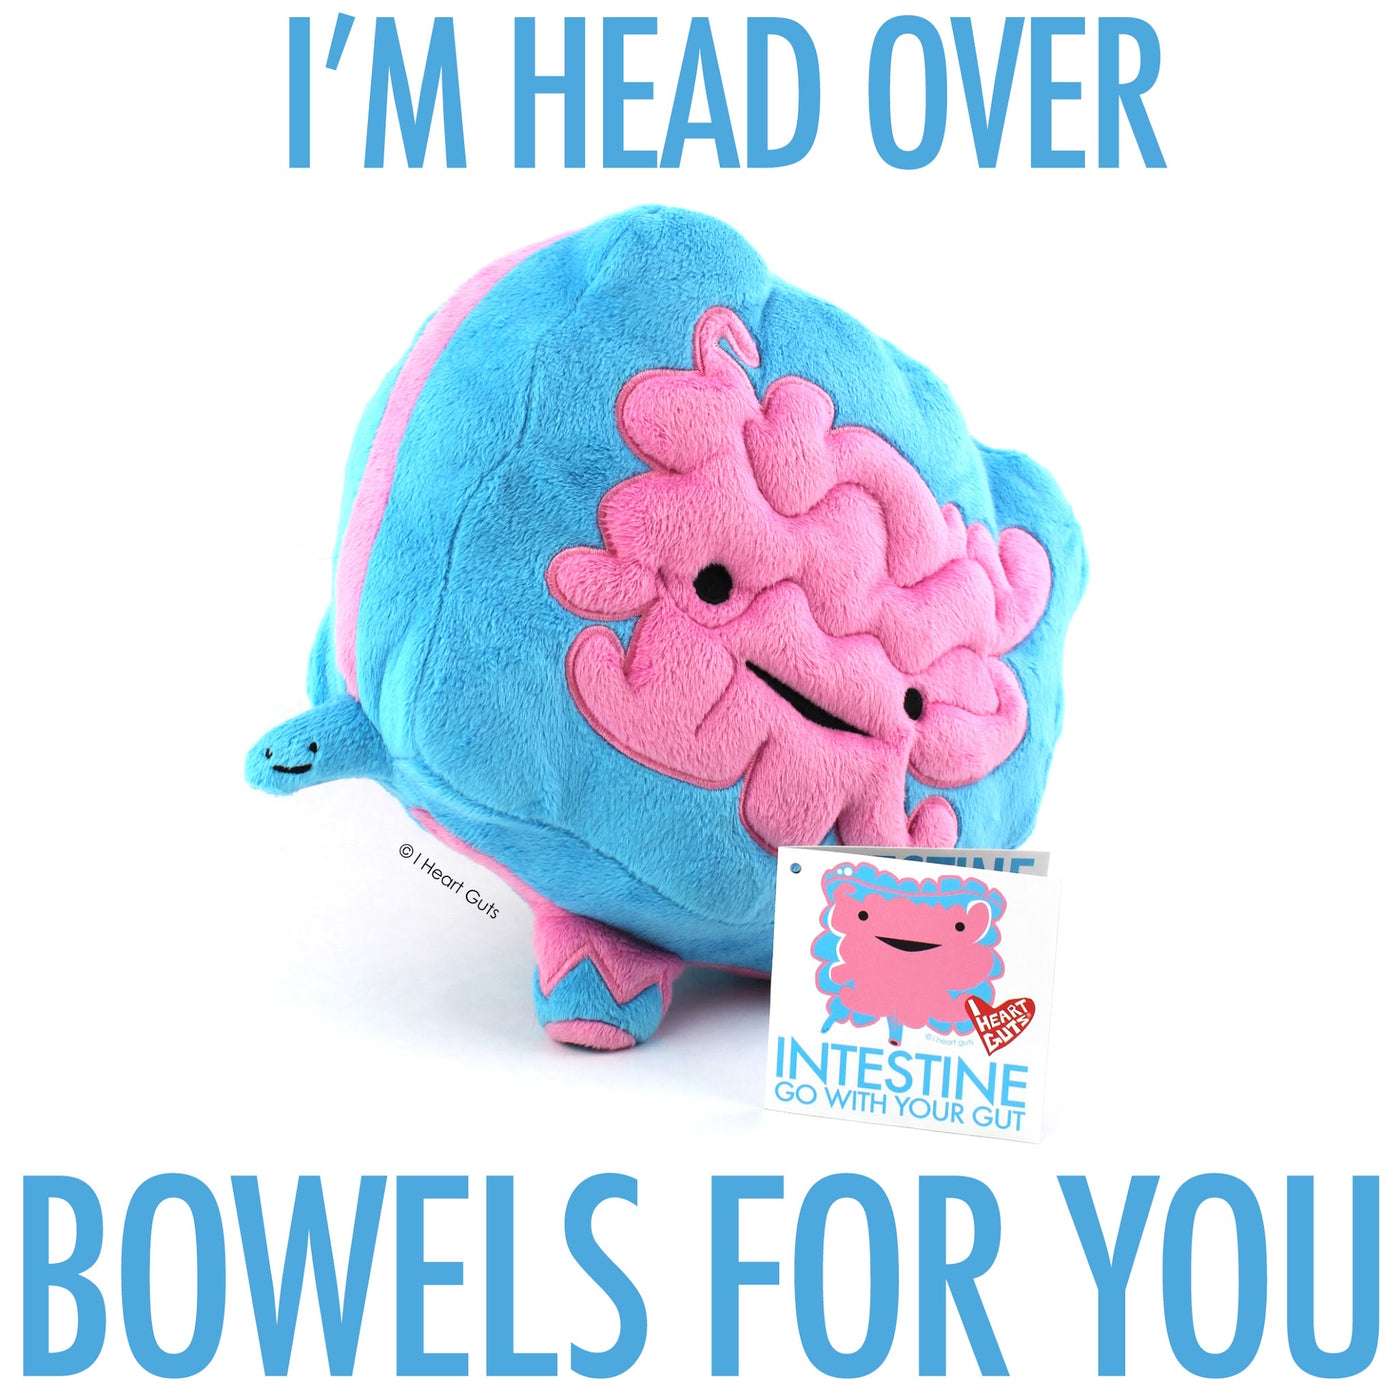 Intestine Plush - Go With Your Gut! - Plush Organ Stuffed Toy Pillow - I Heart Guts